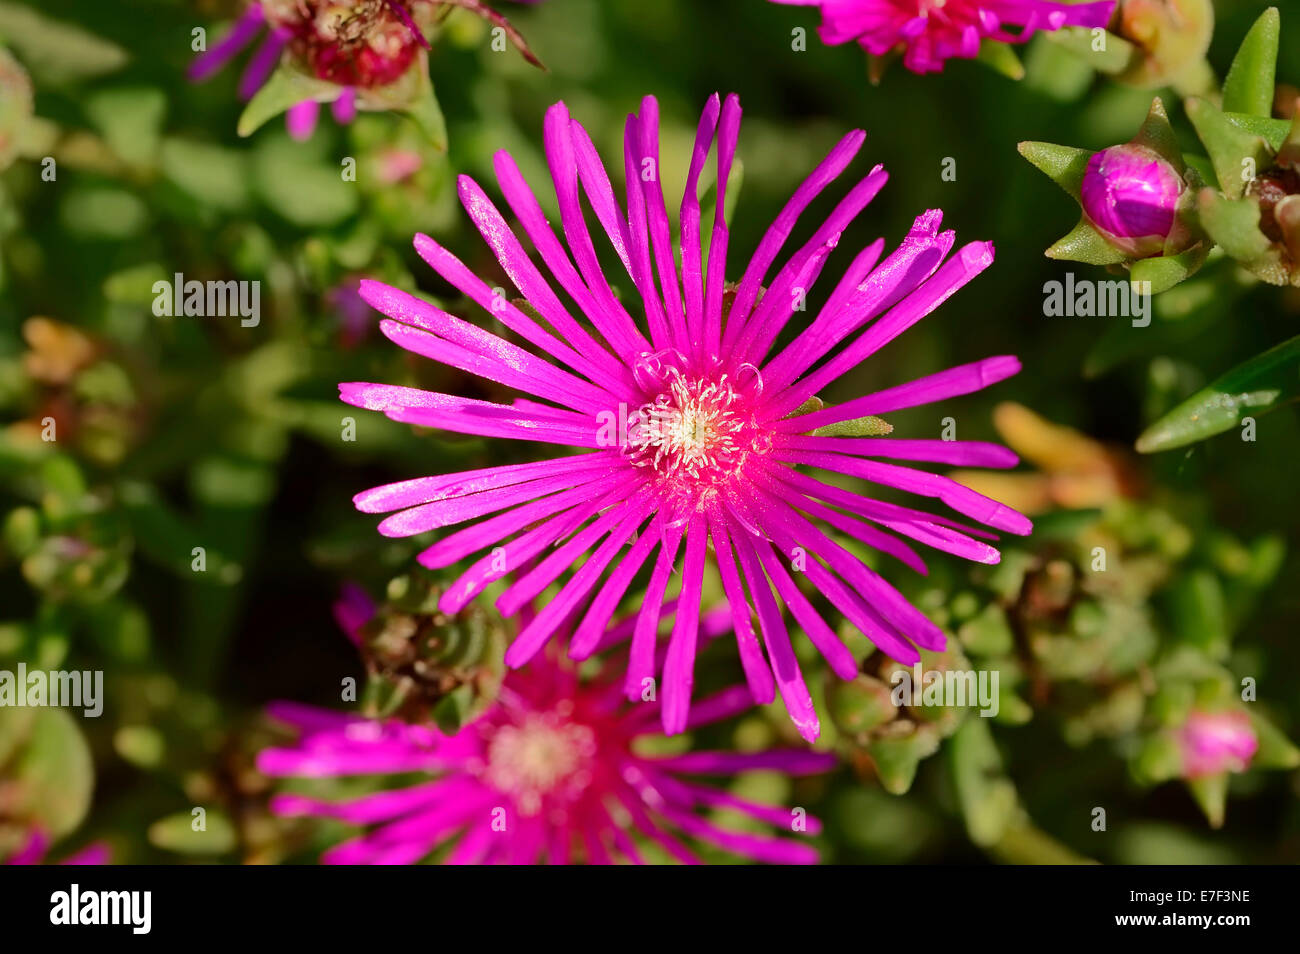 Hardy Rosa Pianta di ghiaccio (Delosperma cooperi, Mesembryanthemum cooperi), fiore, nativo per l'Africa Foto Stock